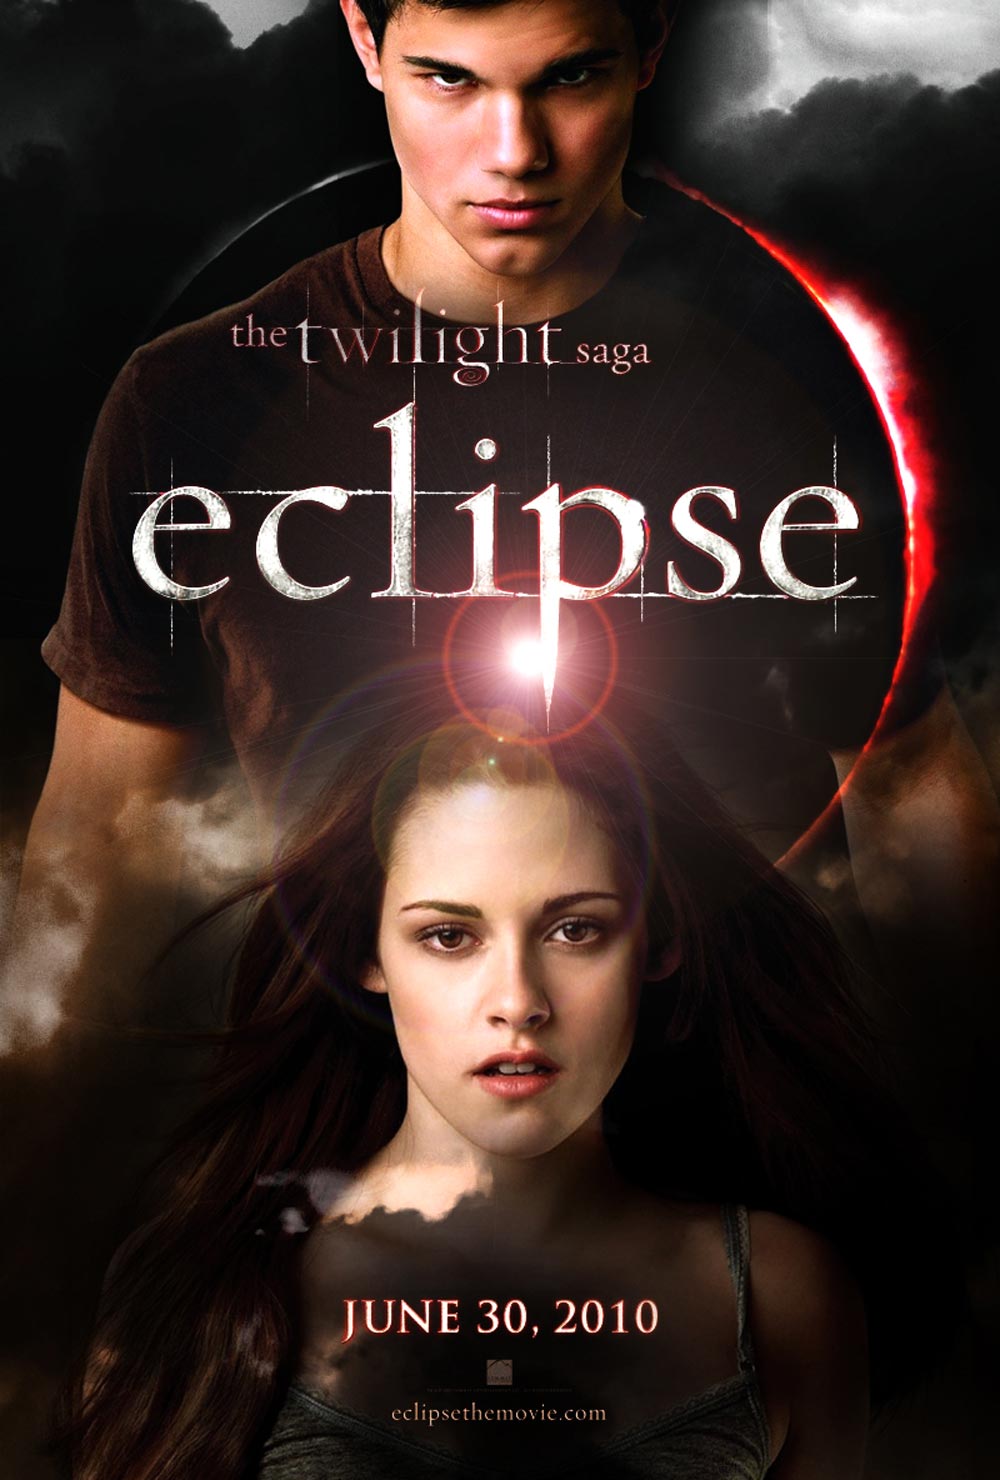 The Twilight Saga: Eclipse Posters